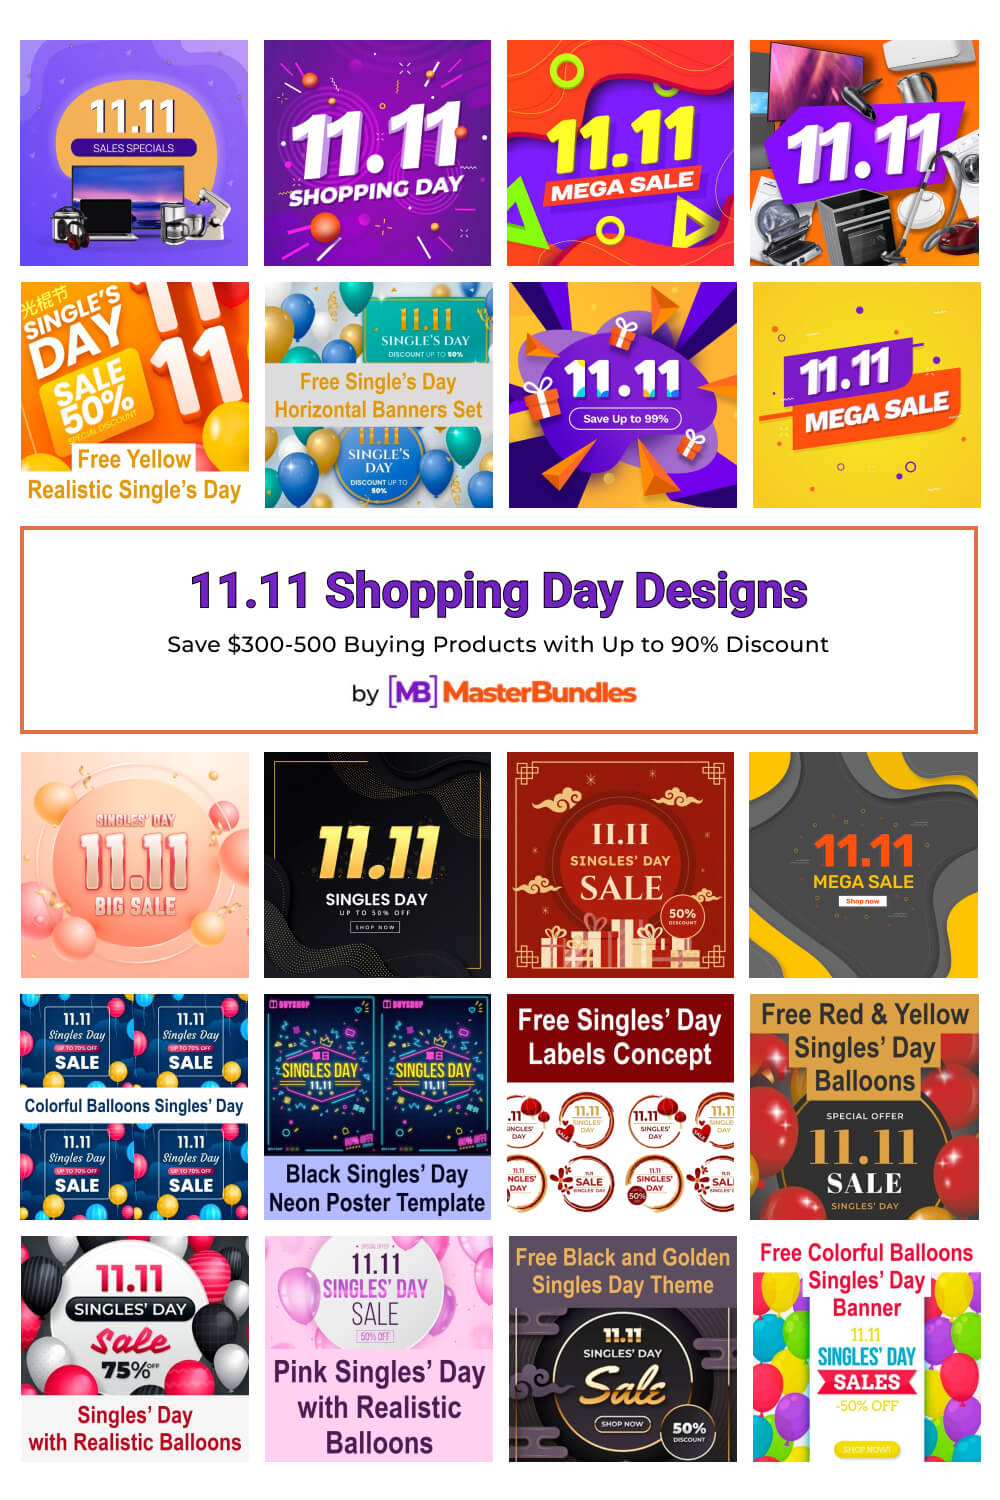 11.11 shopping day designs pinterest image.